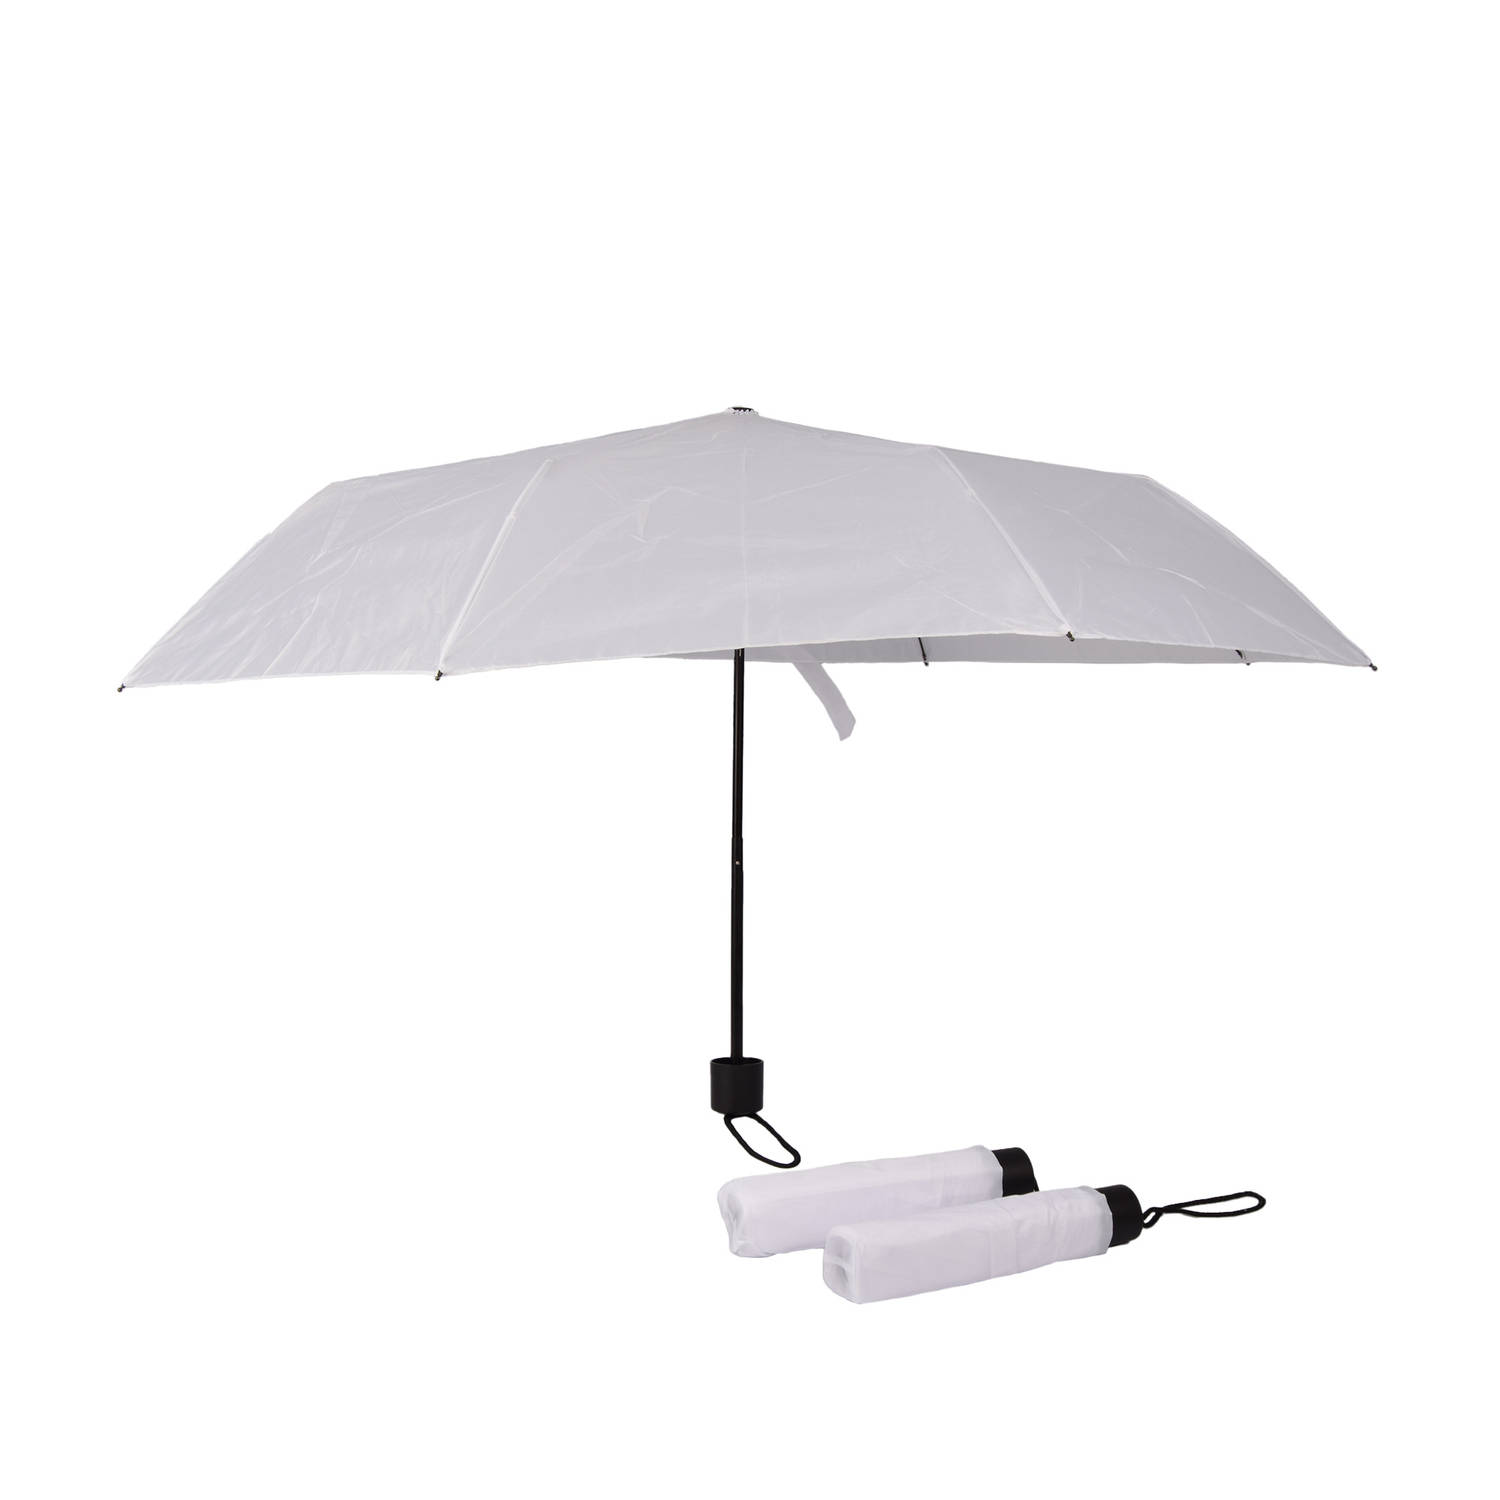 Set van 3 opvouwbare handopening paraplu's Stevig, 100 cm diameter Witte paraplu Goedkope parap